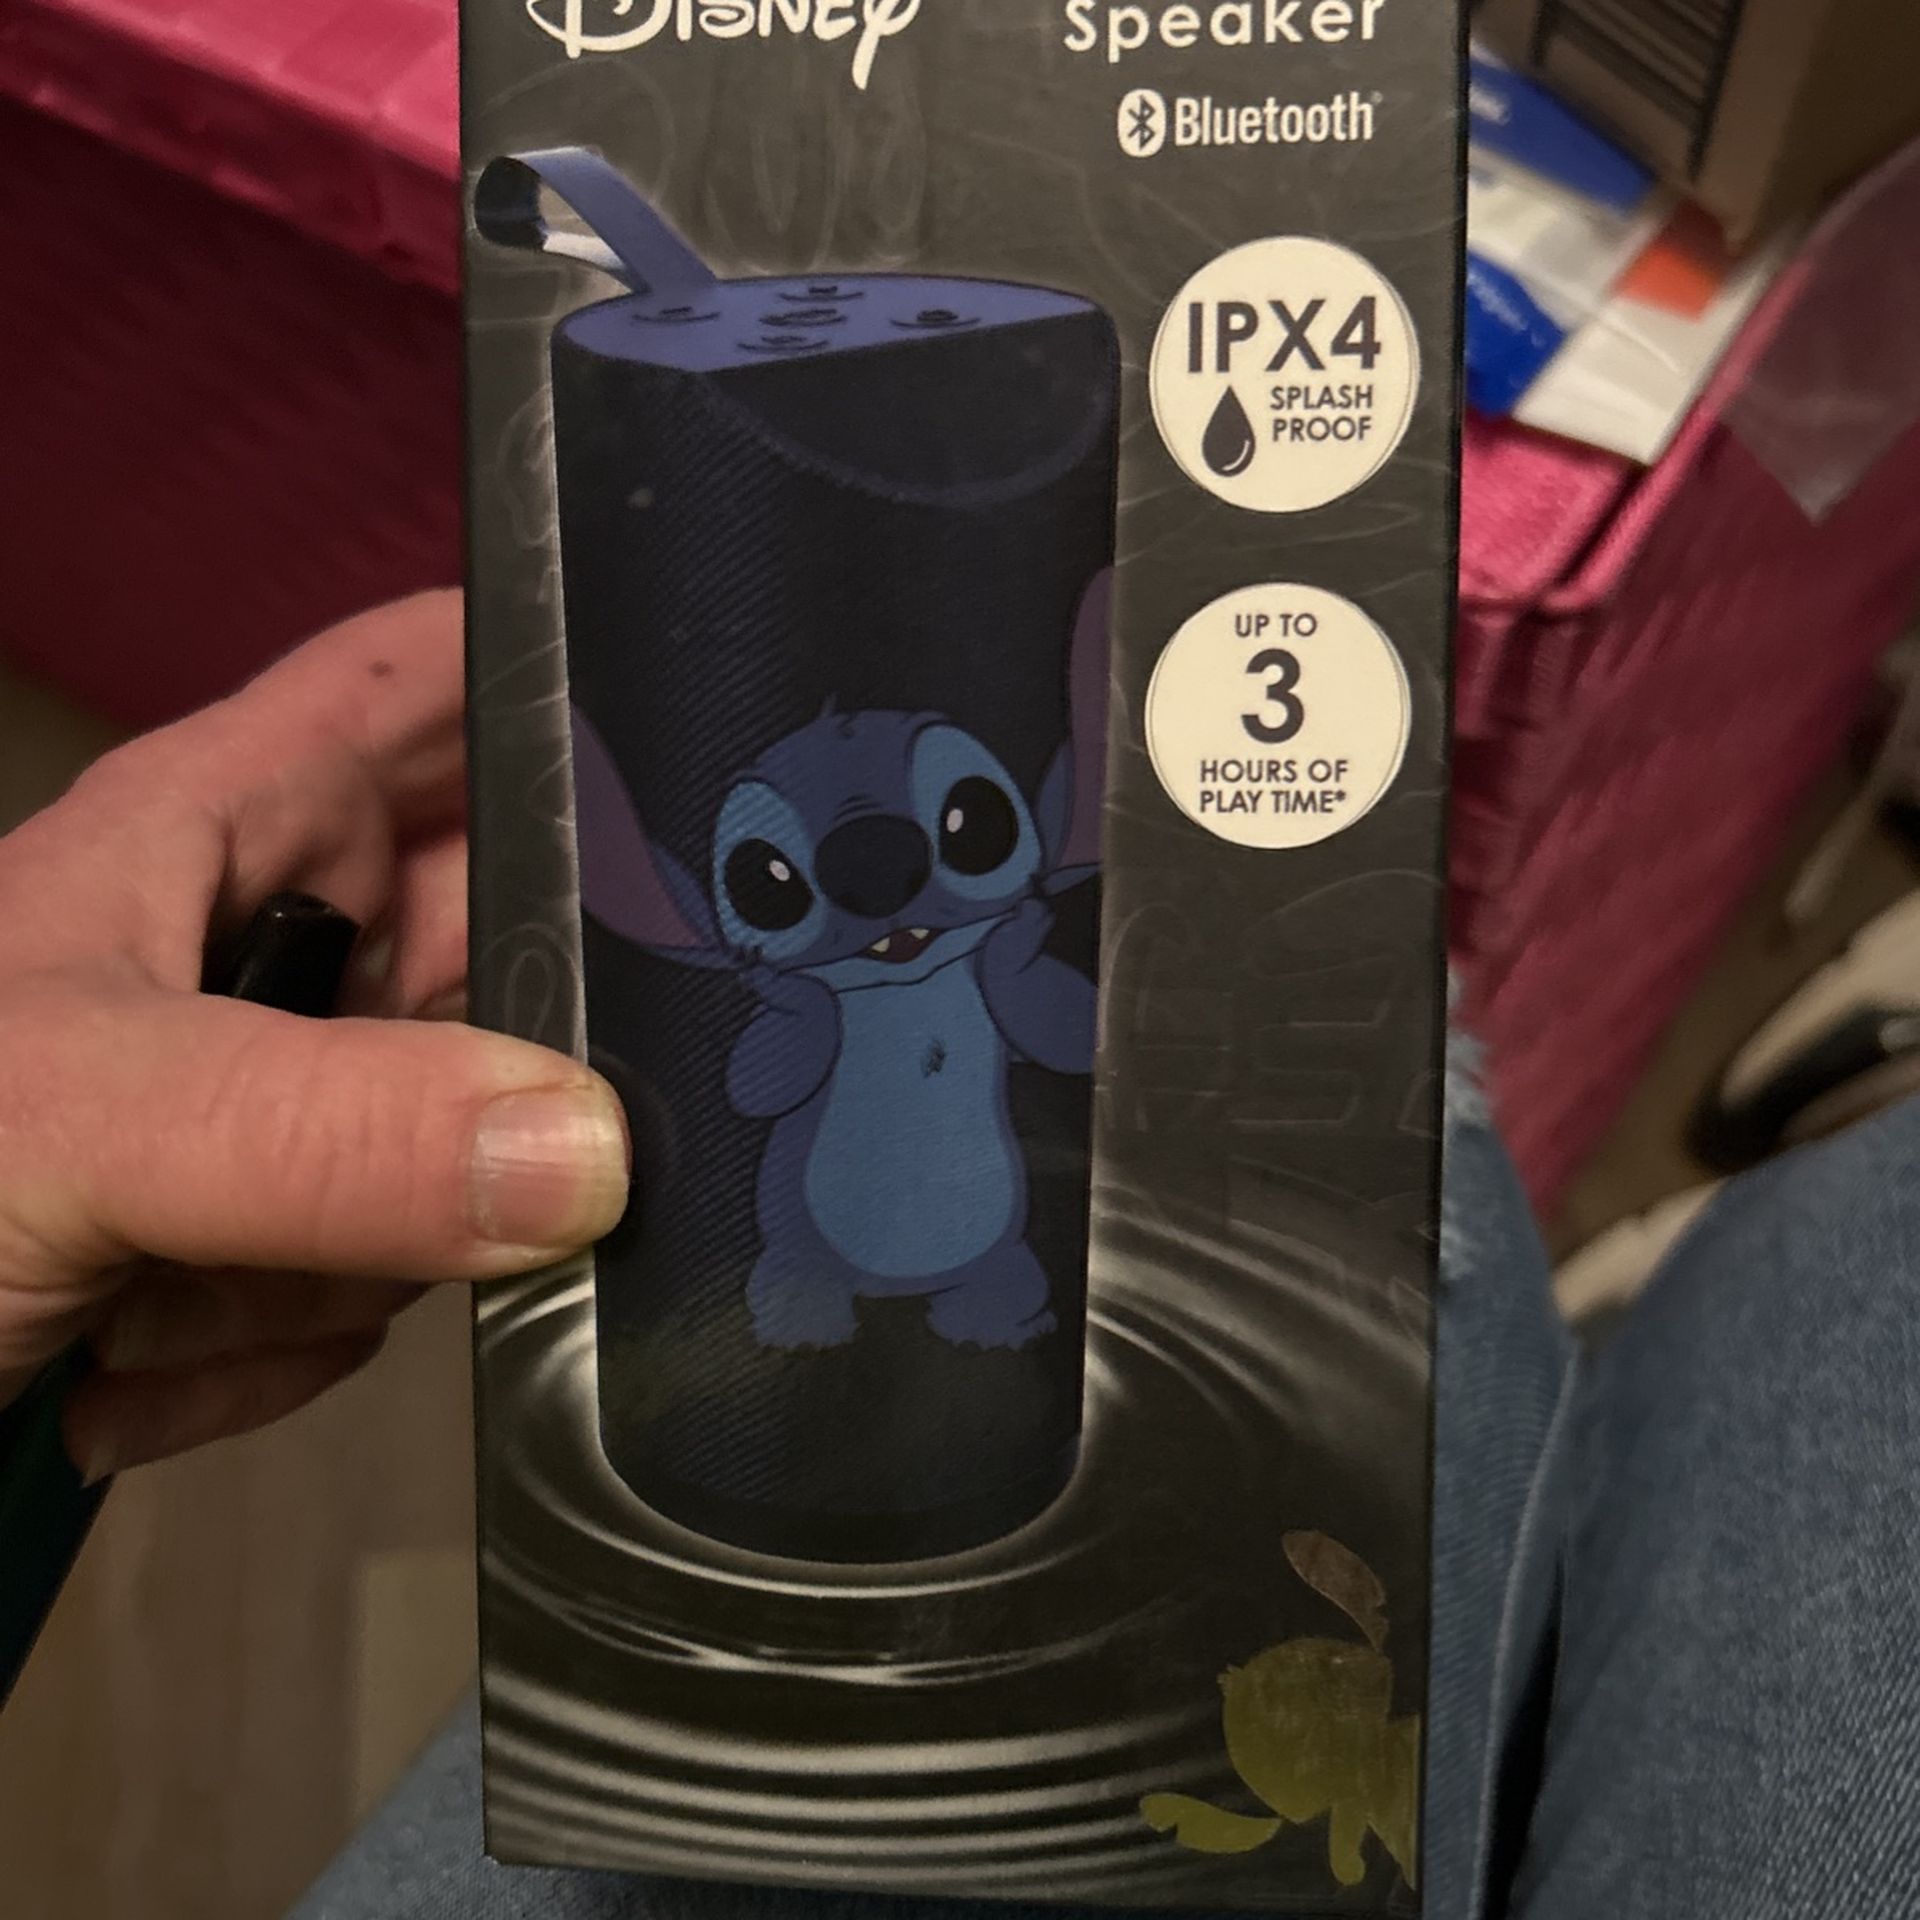 Disney's Stitch bluetooth speaker